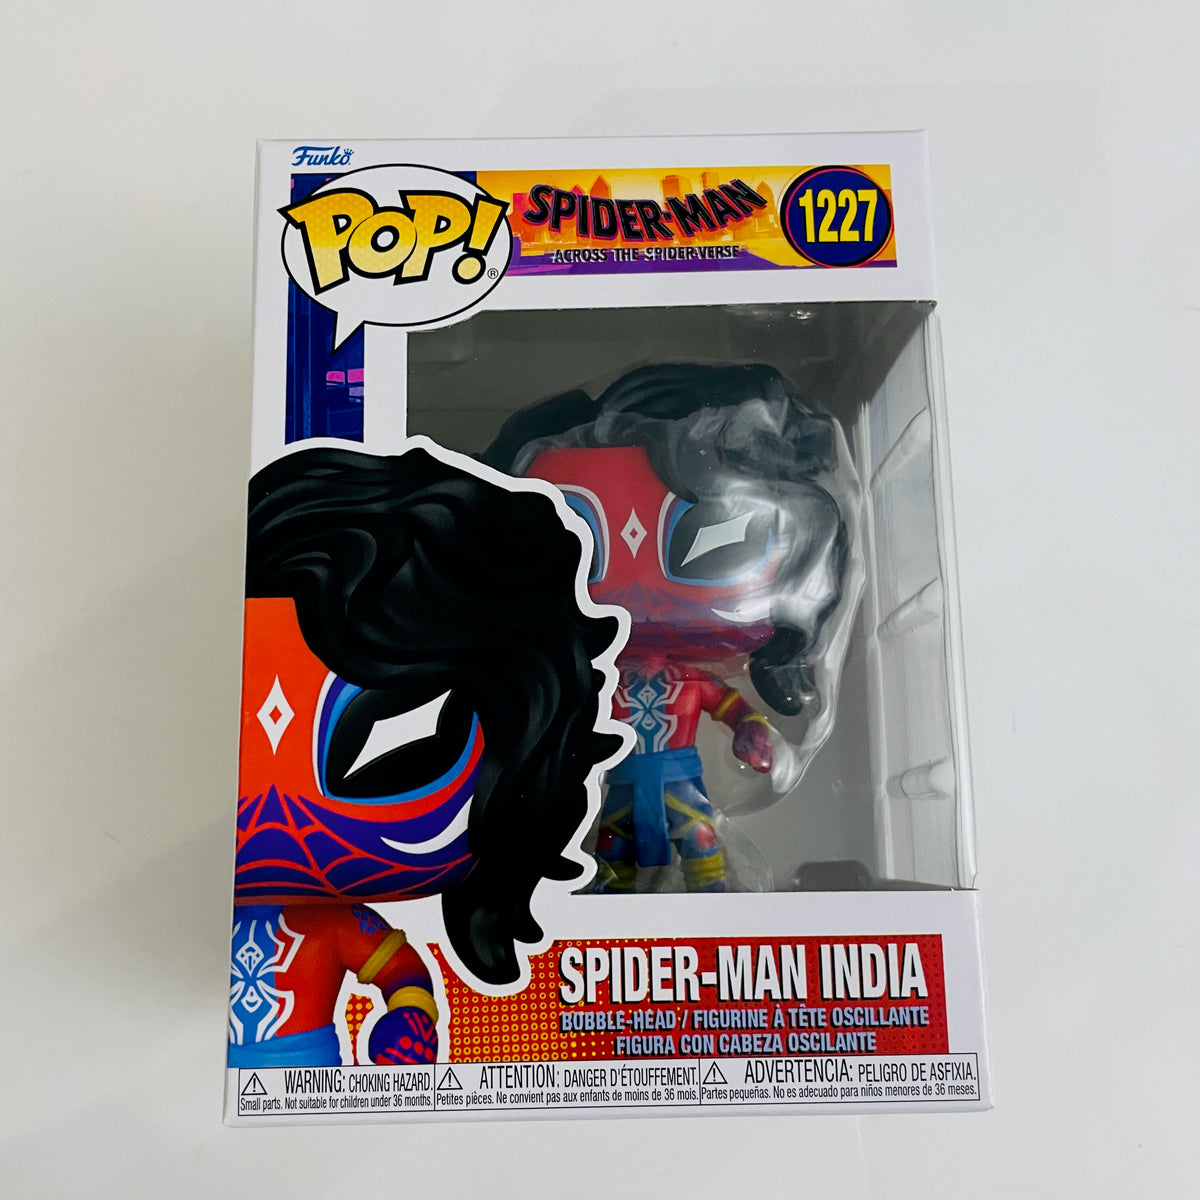 Buy Pop! Spider-Man India at Funko.